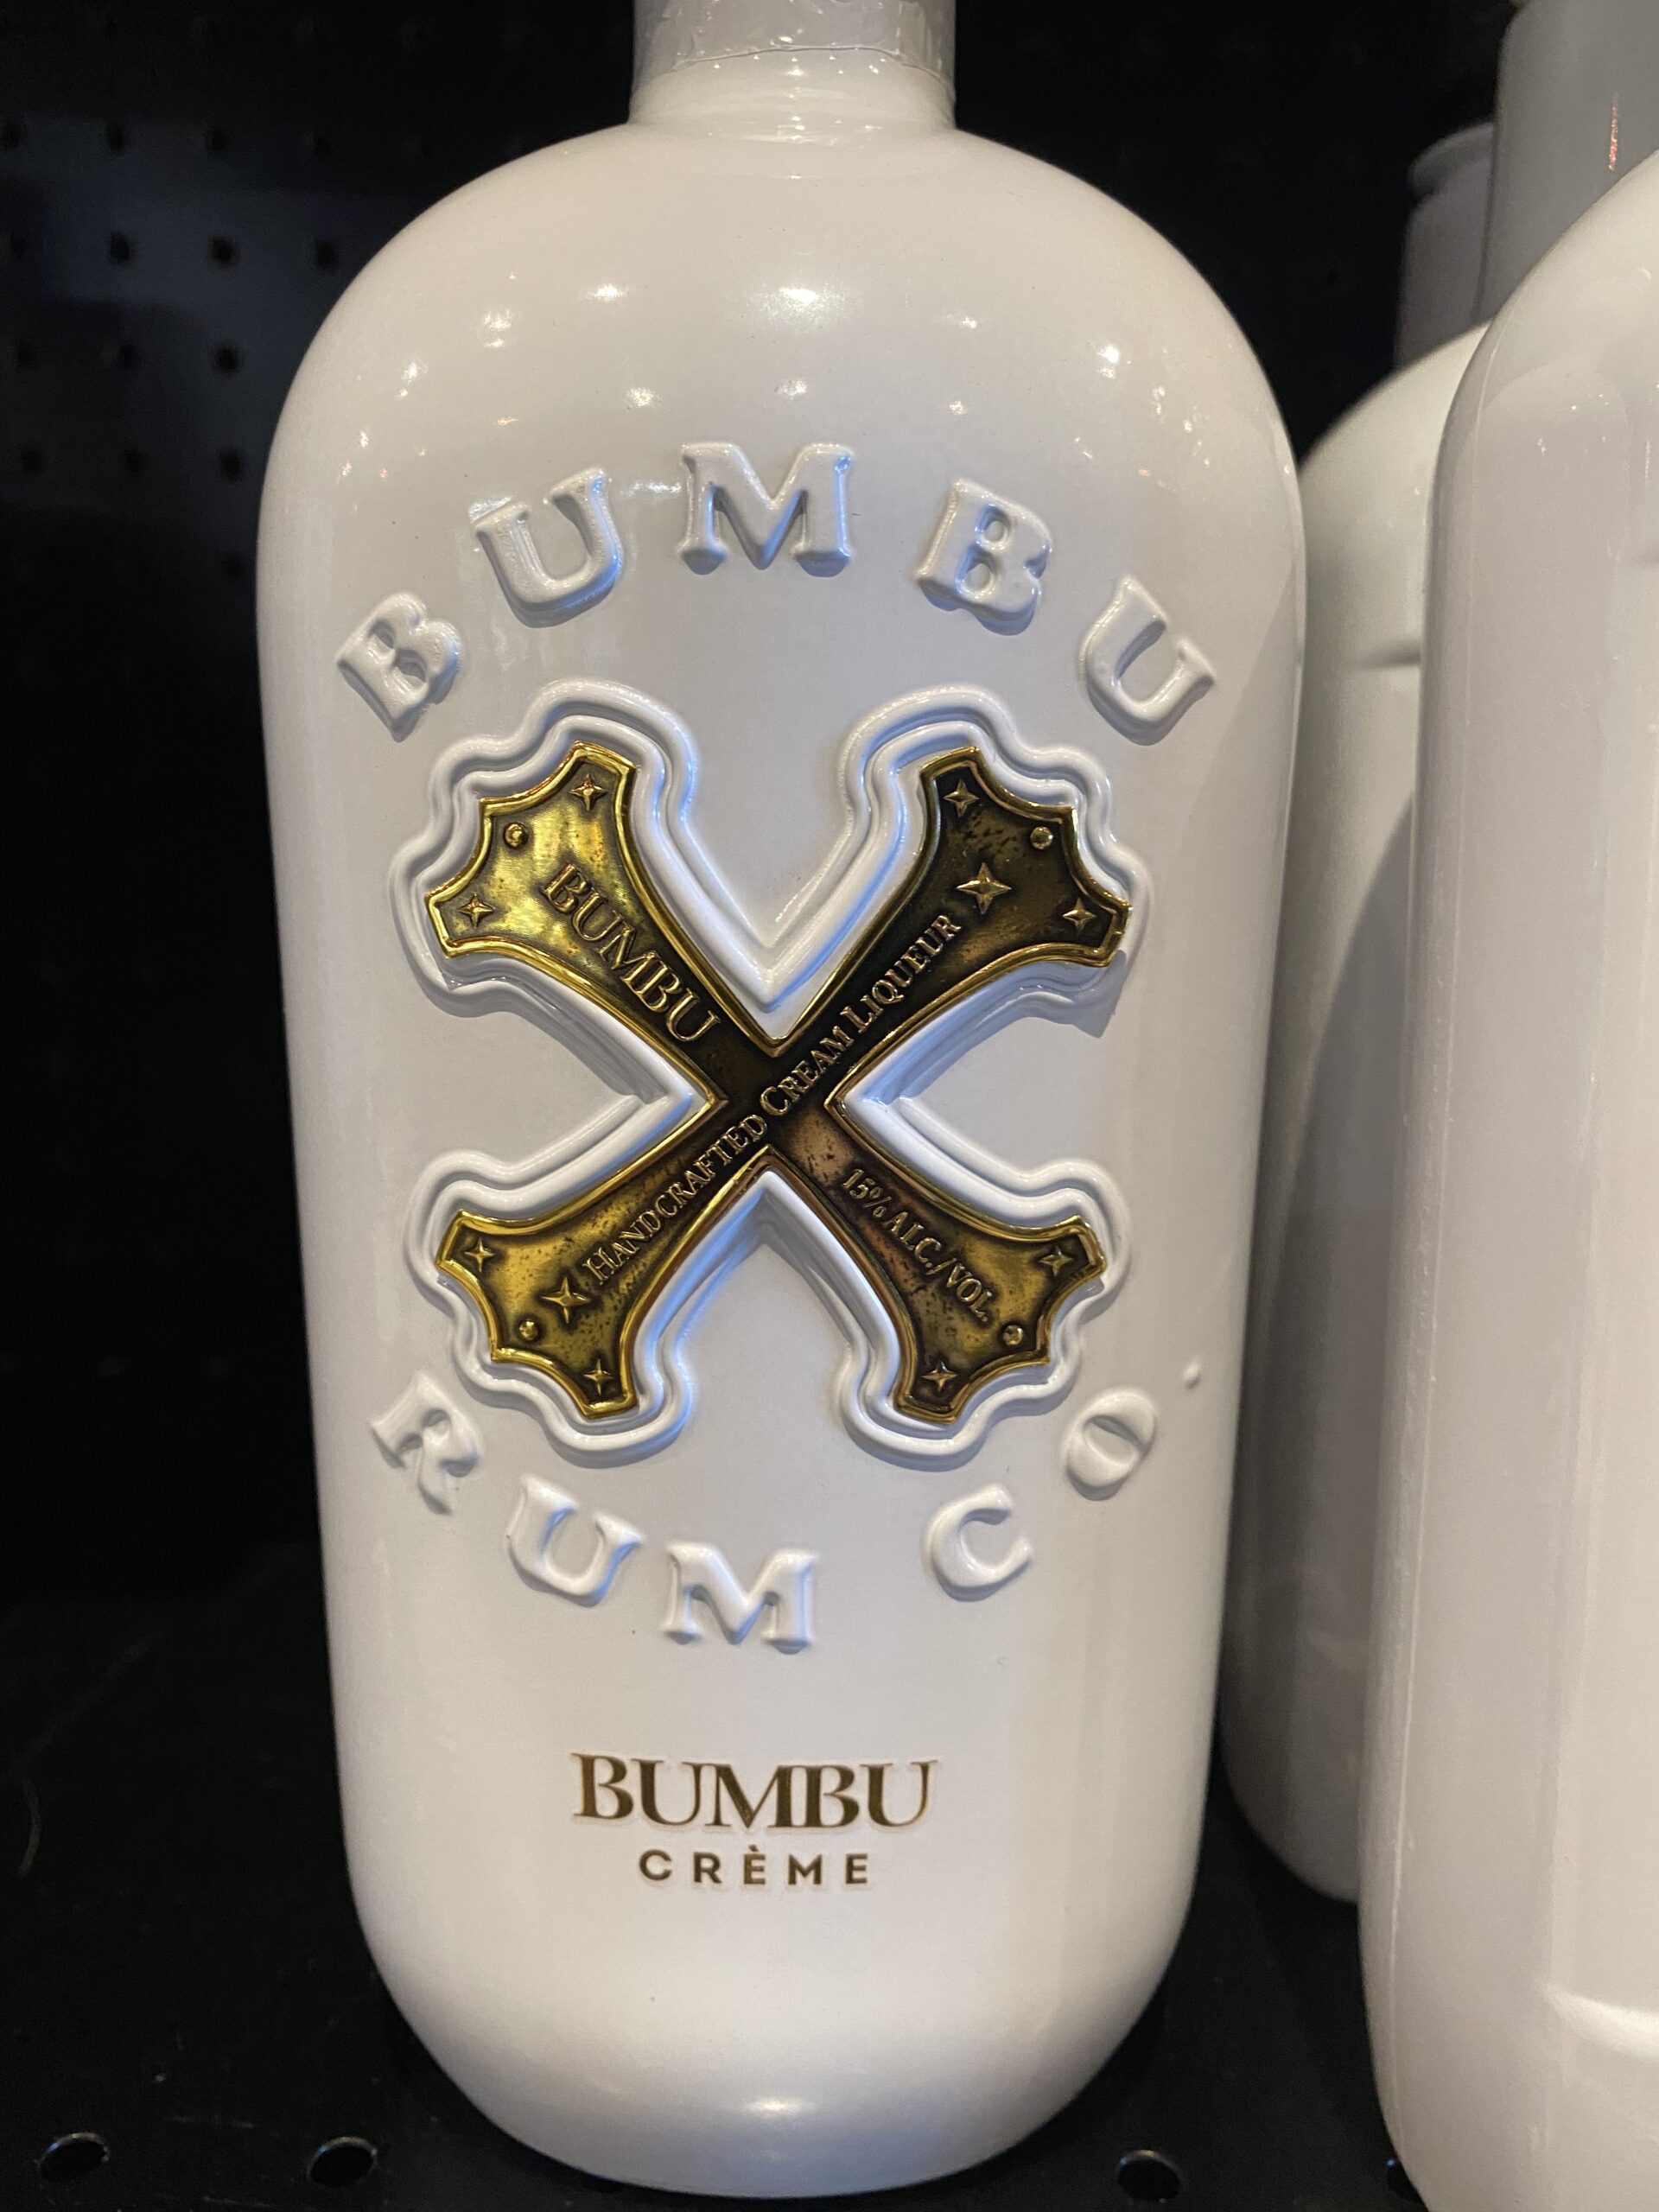 Bumbu cream